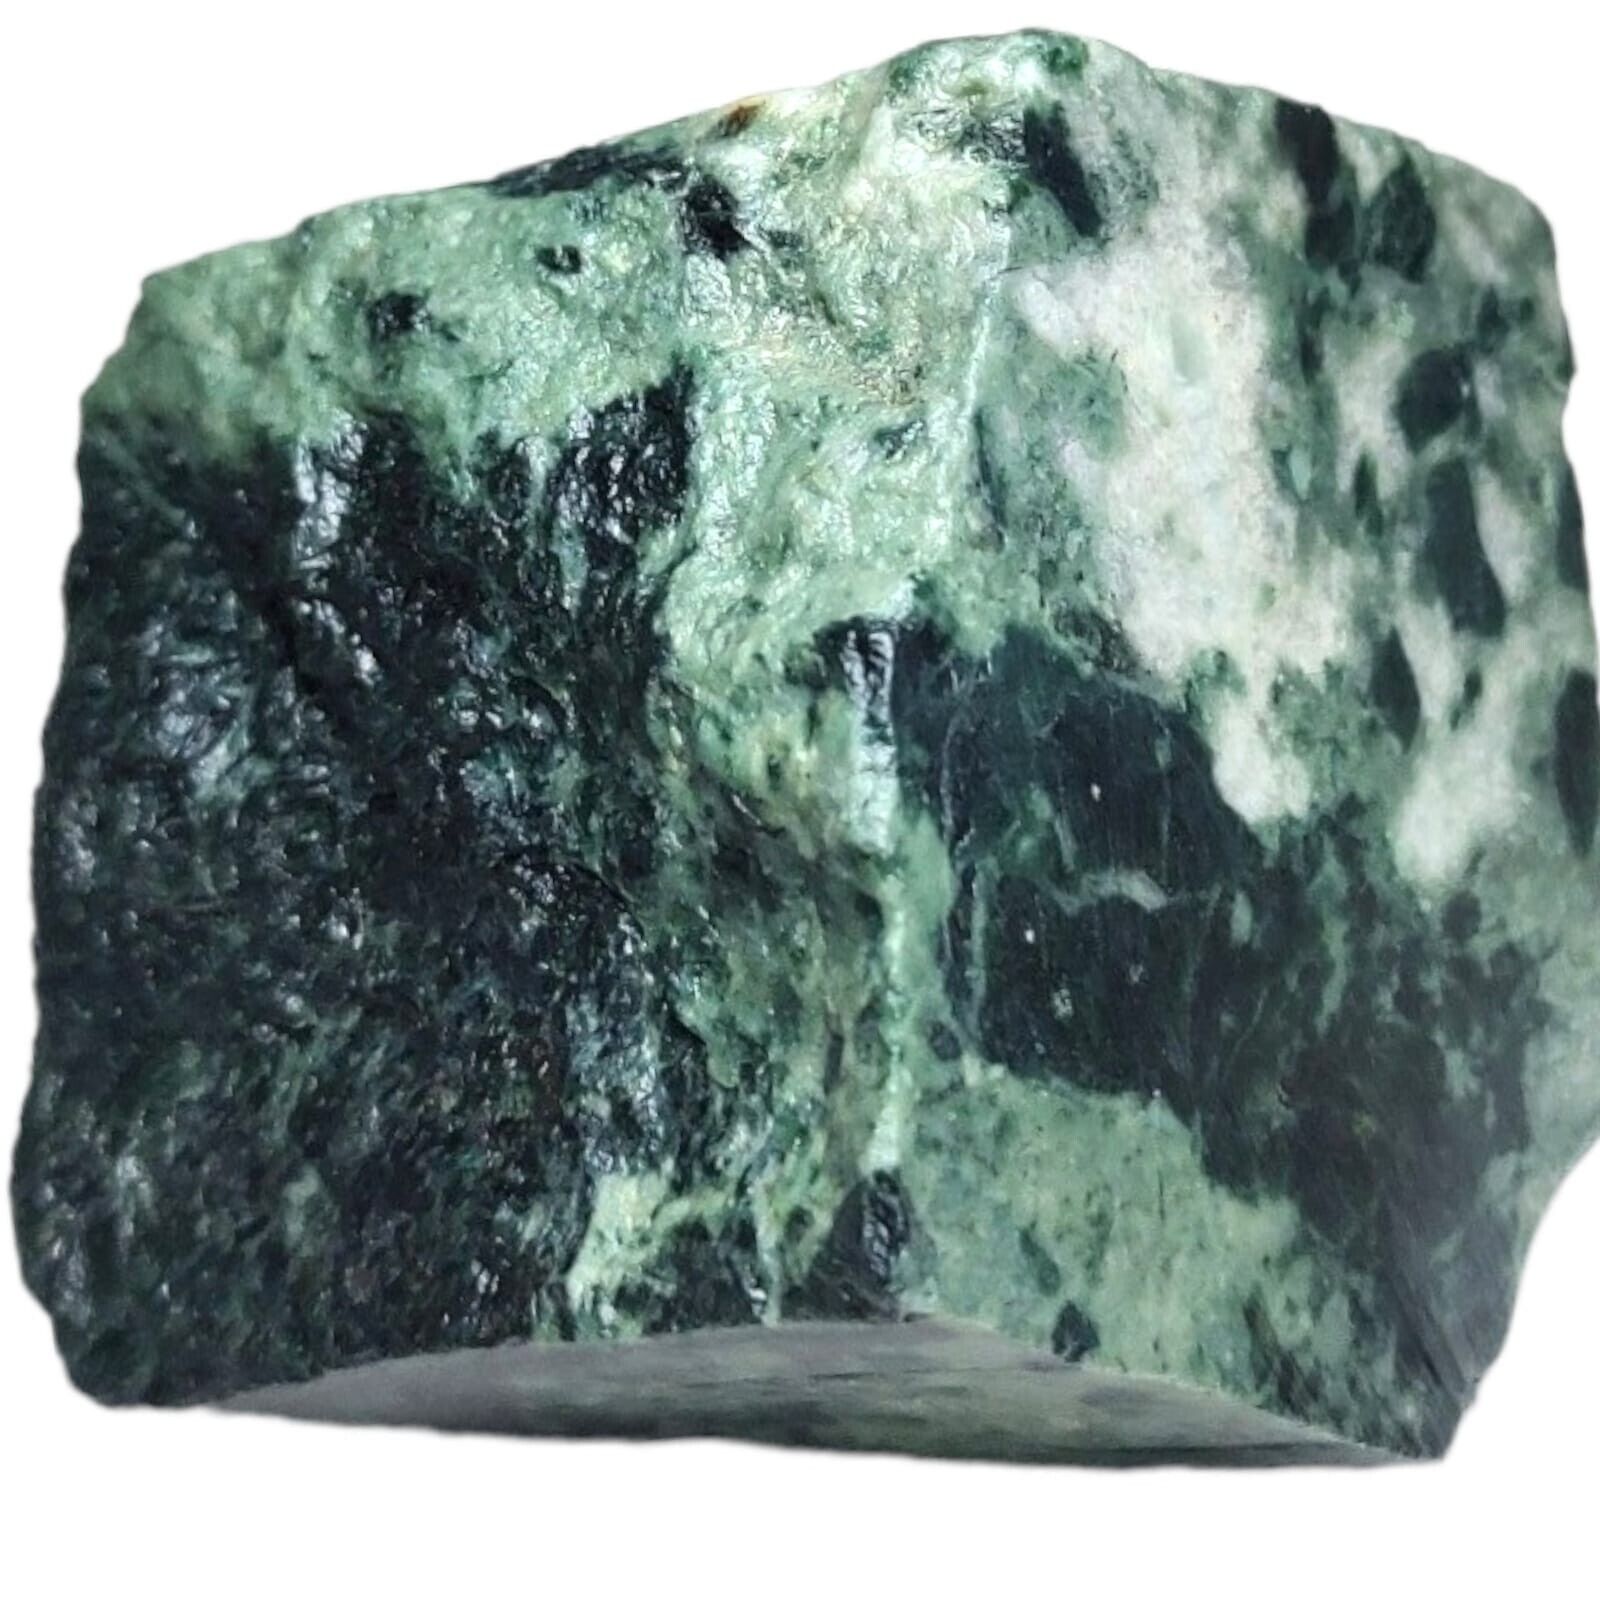 1.2 Lb Guatemalan Jadeite Natural - 588g of Amazing Quality Translucent Lapidary